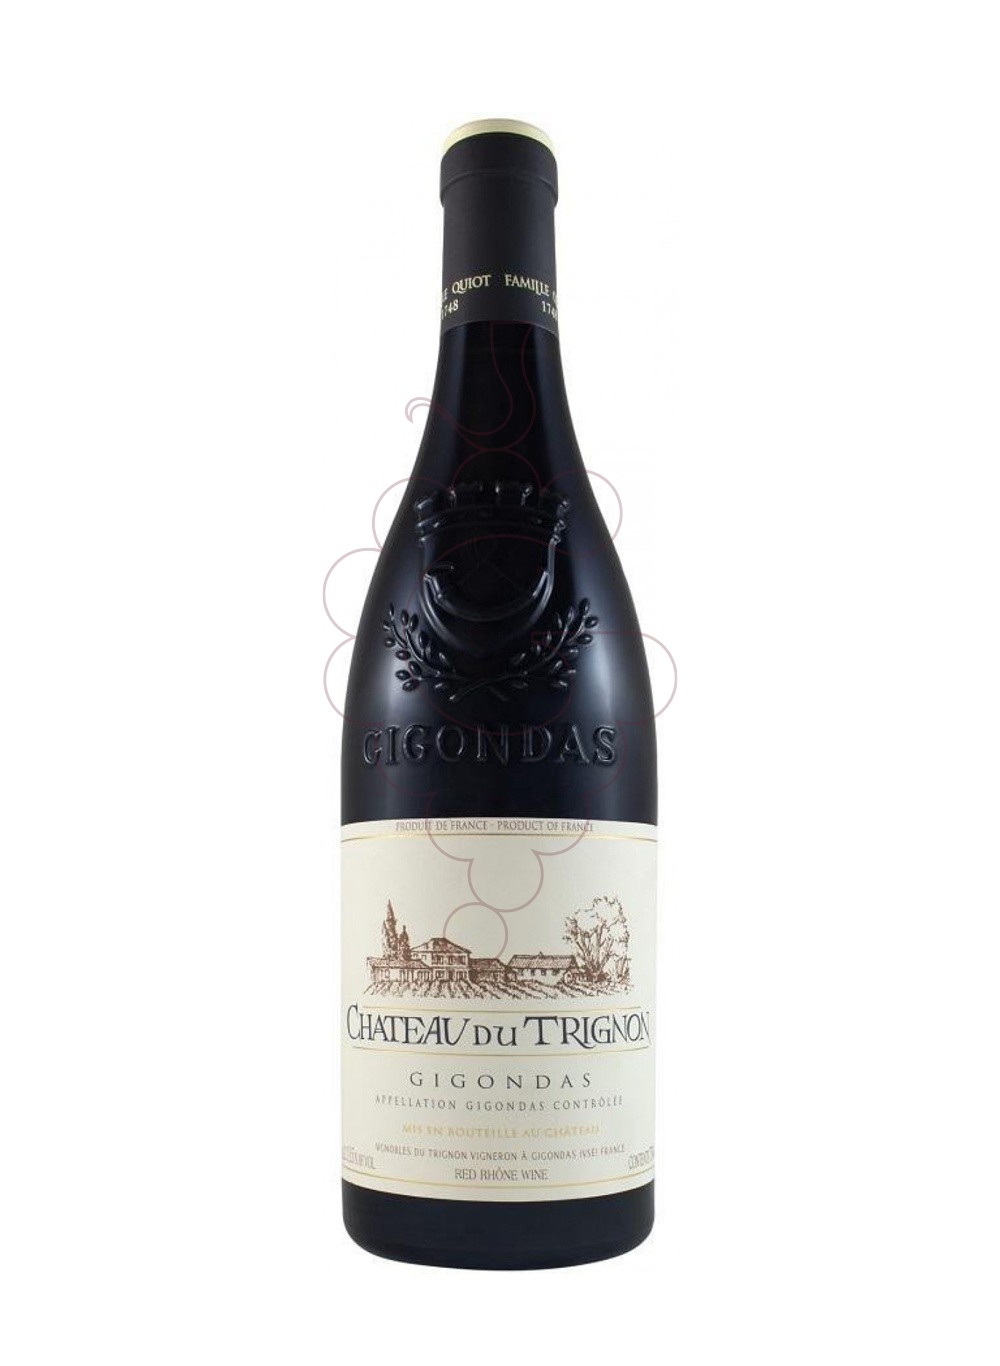 Foto Ch. trignon gigondas negre 17 vino tinto